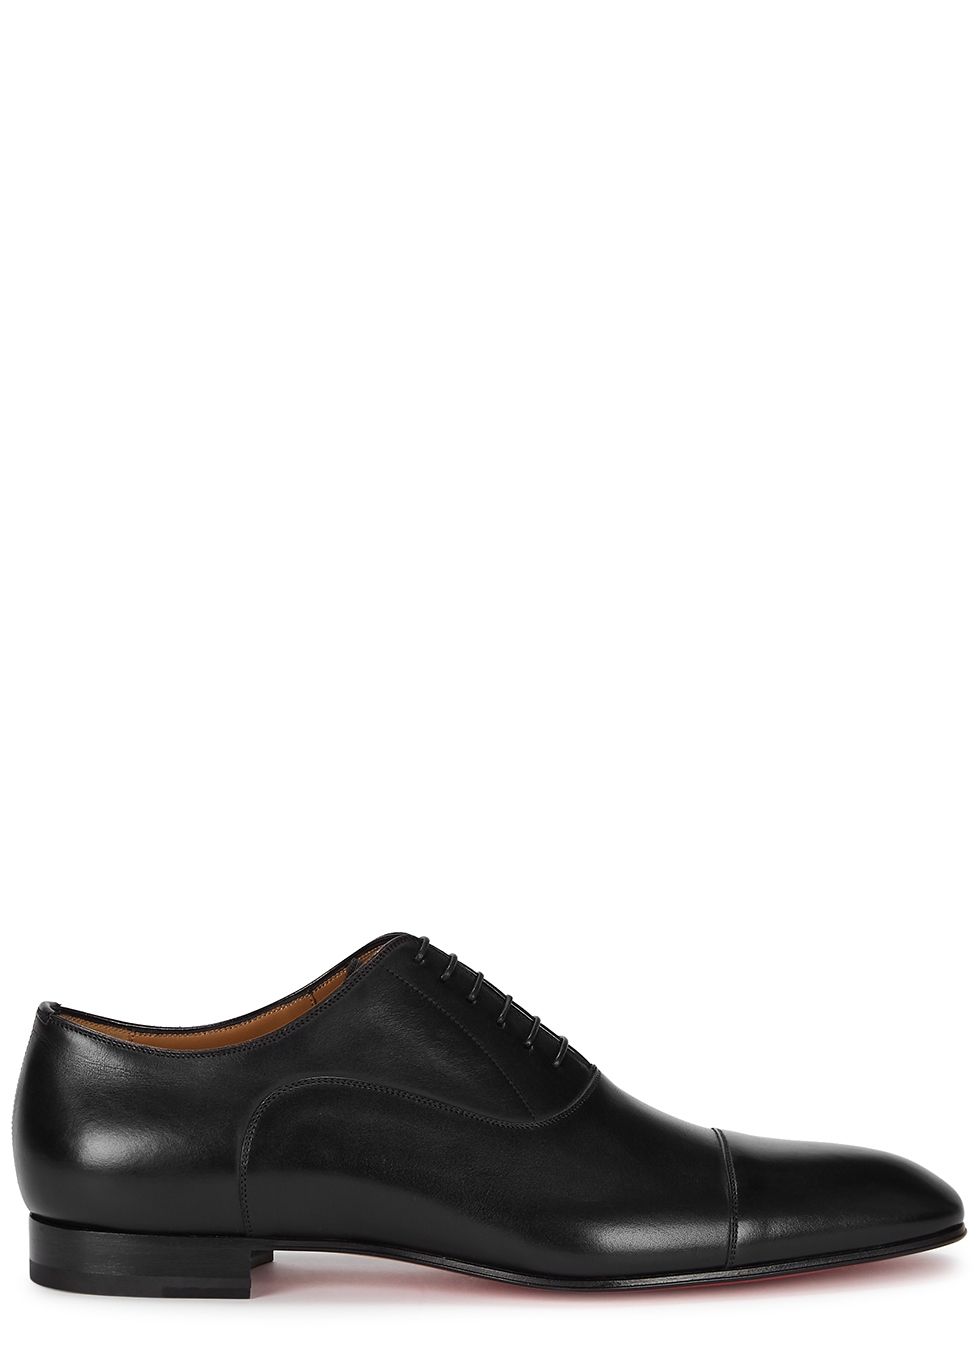 Christian Louboutin Greggo black leather Oxford shoes - Harvey Nichols